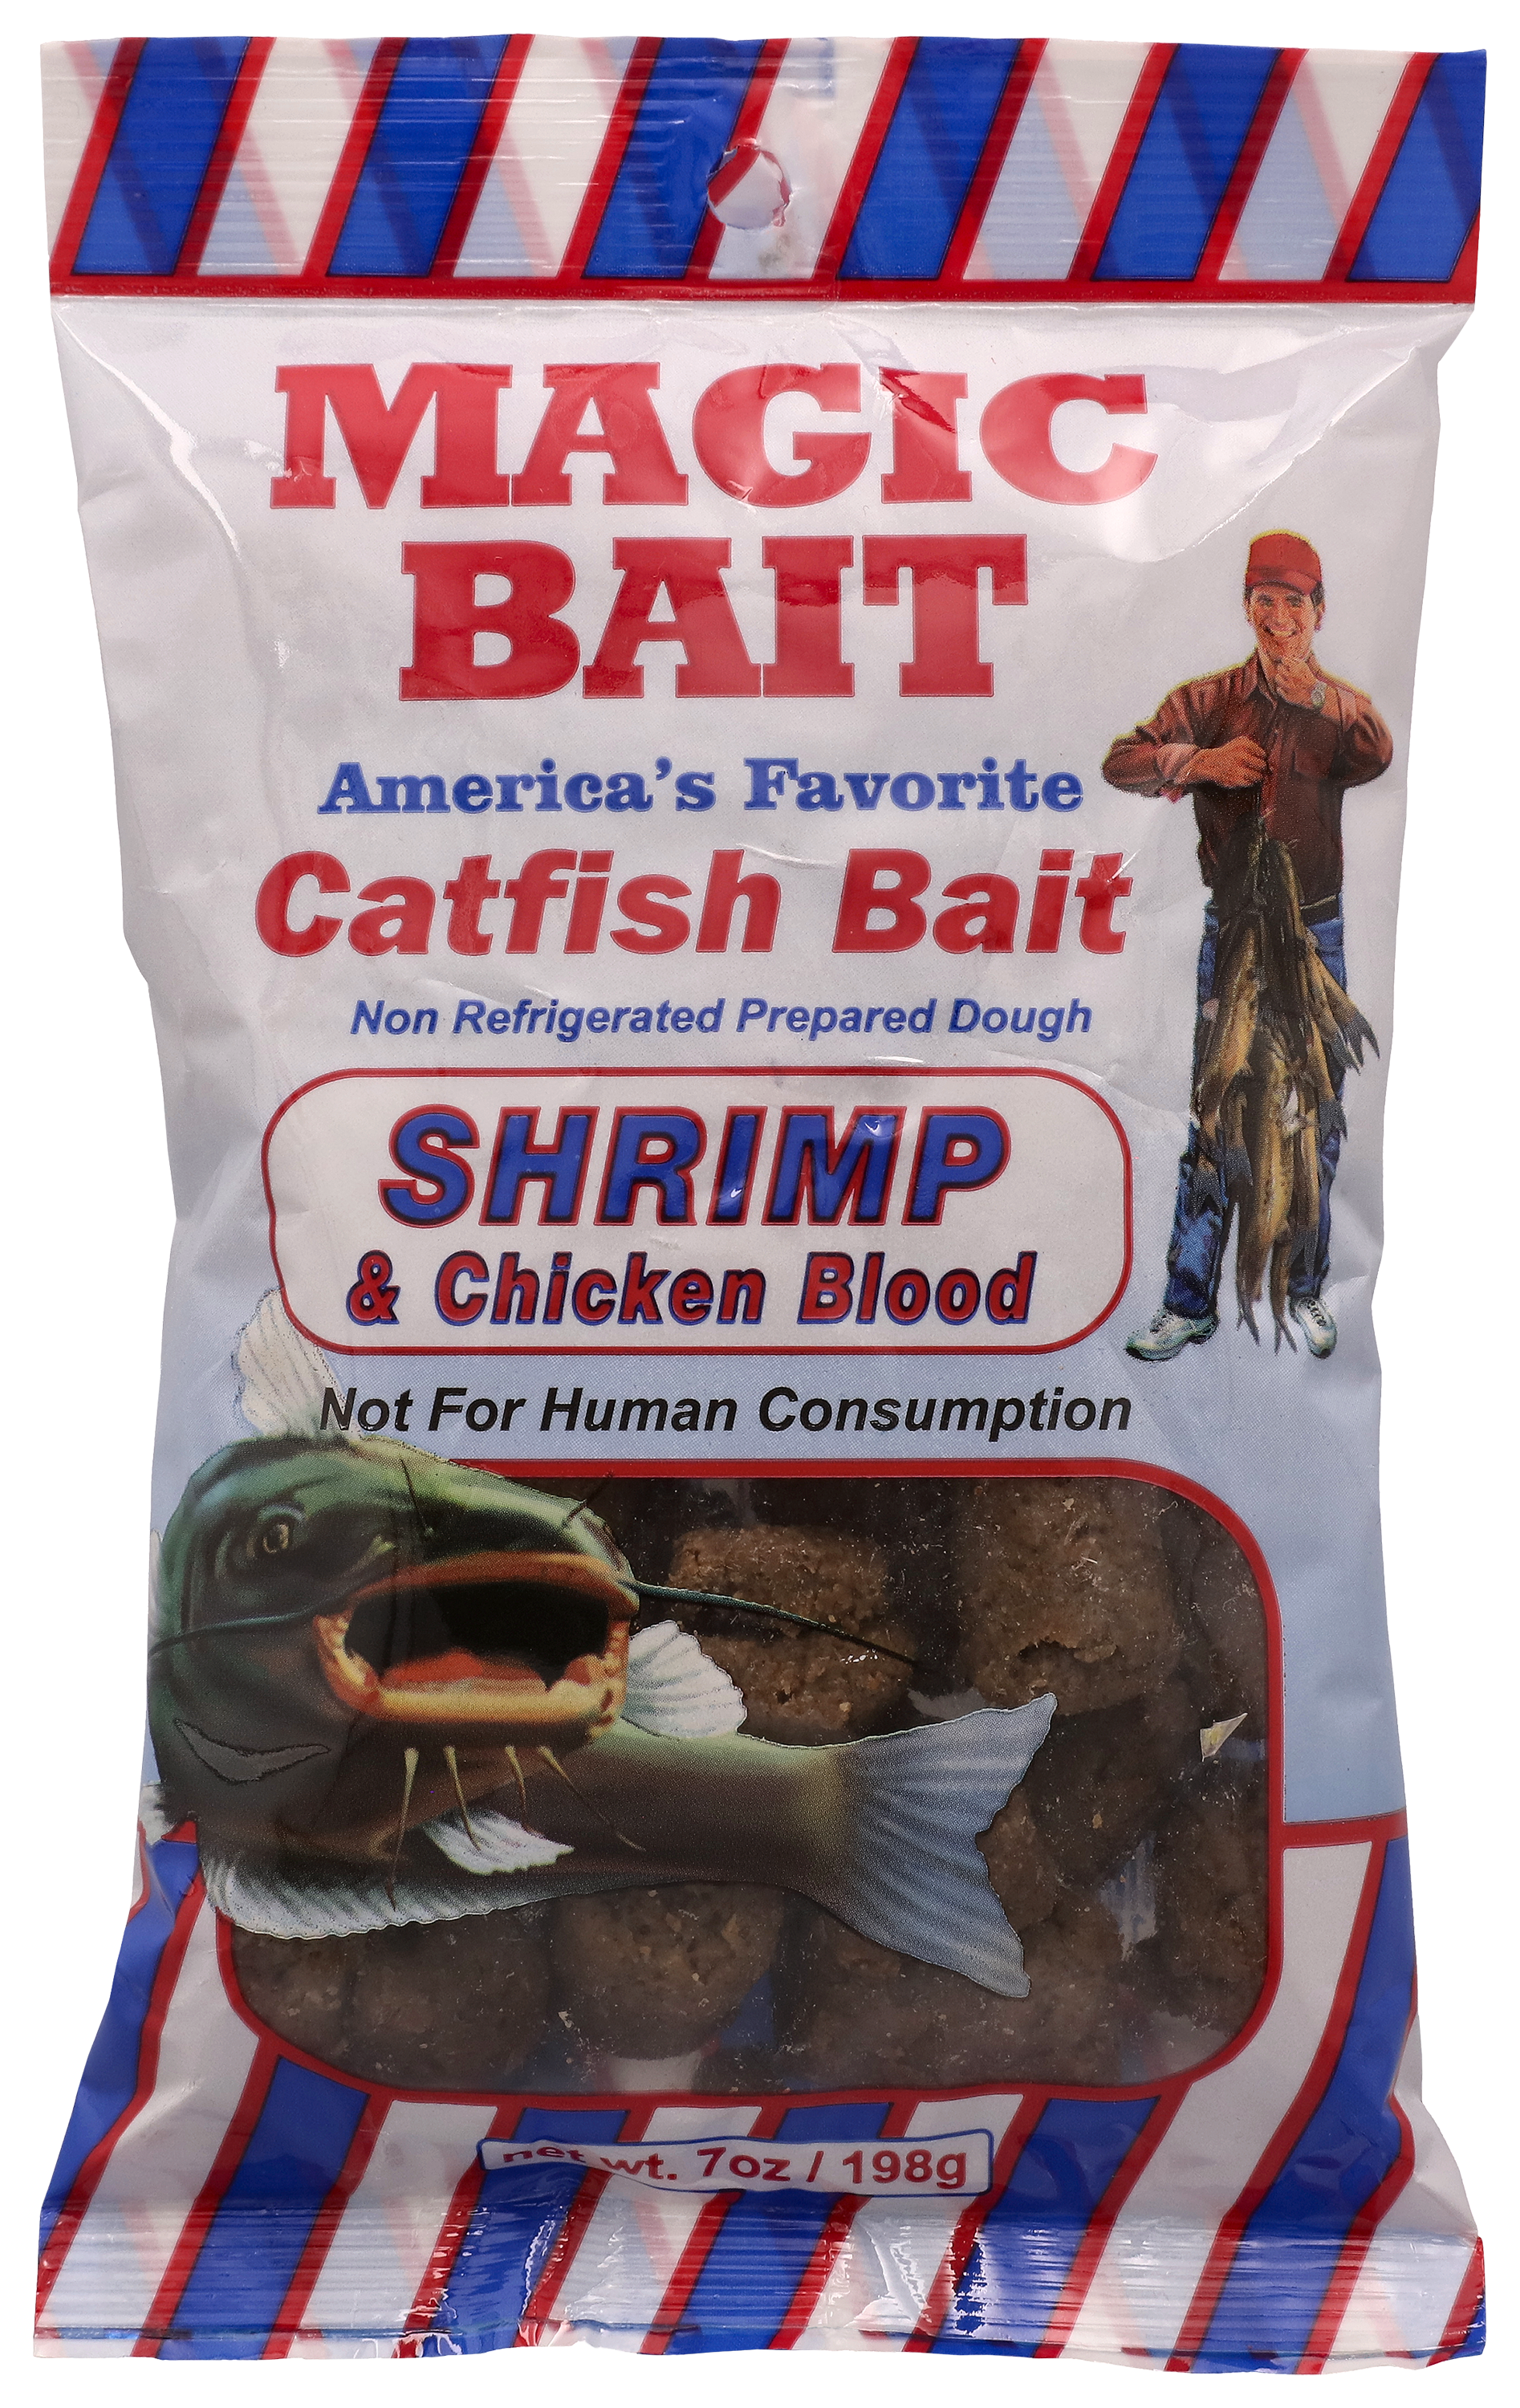 Magic Bait Prepared Dough Catfish Bait